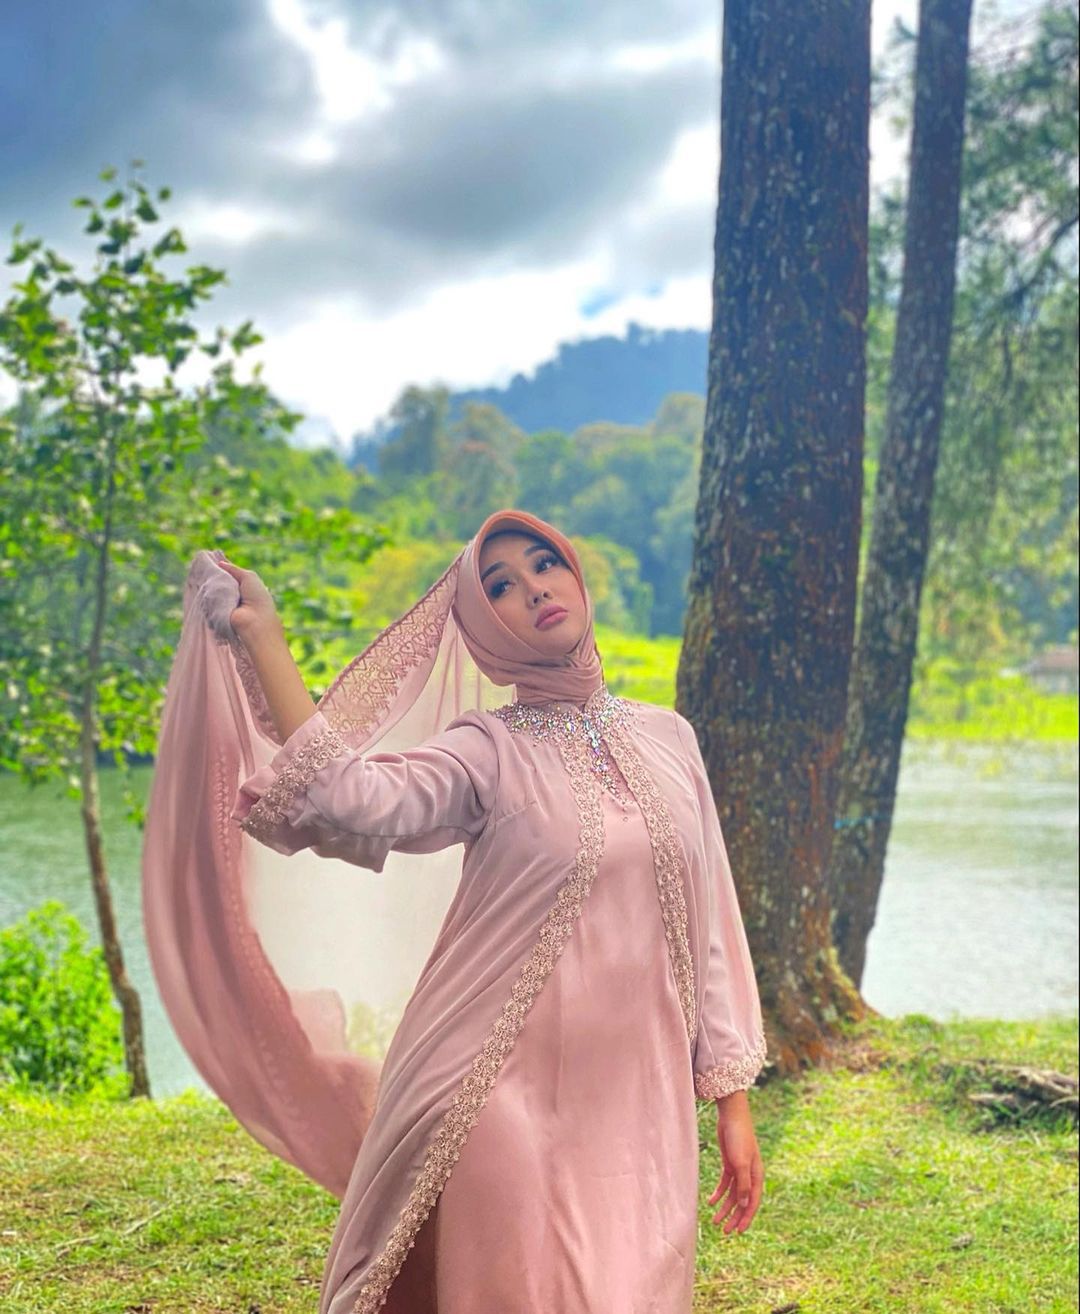 Lucinta Luna Pamer Foto Pakai Hijab, Netizen Auto Pangling!